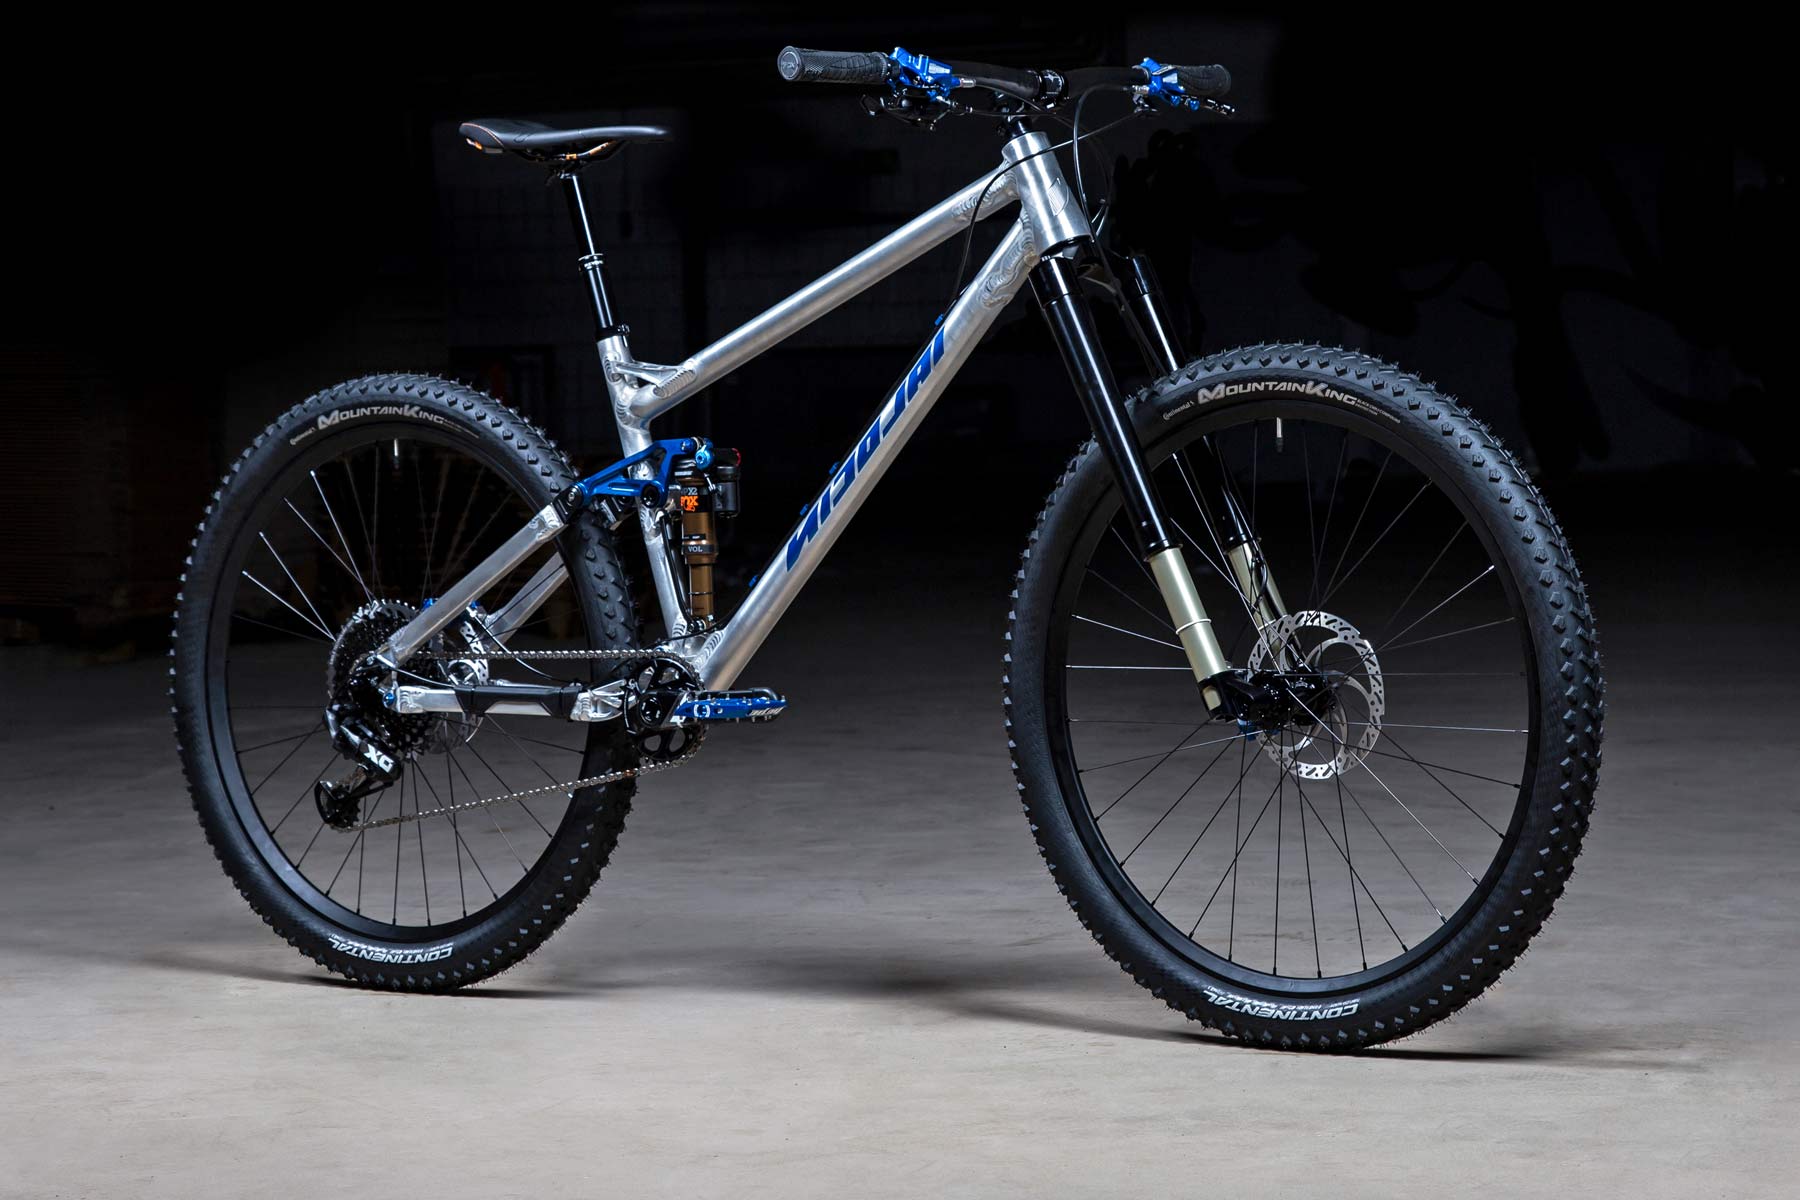 Nicolai Saturn 14 trail bike, modern lightweight aluminum 7020 alloy 140mm all-mountain bike